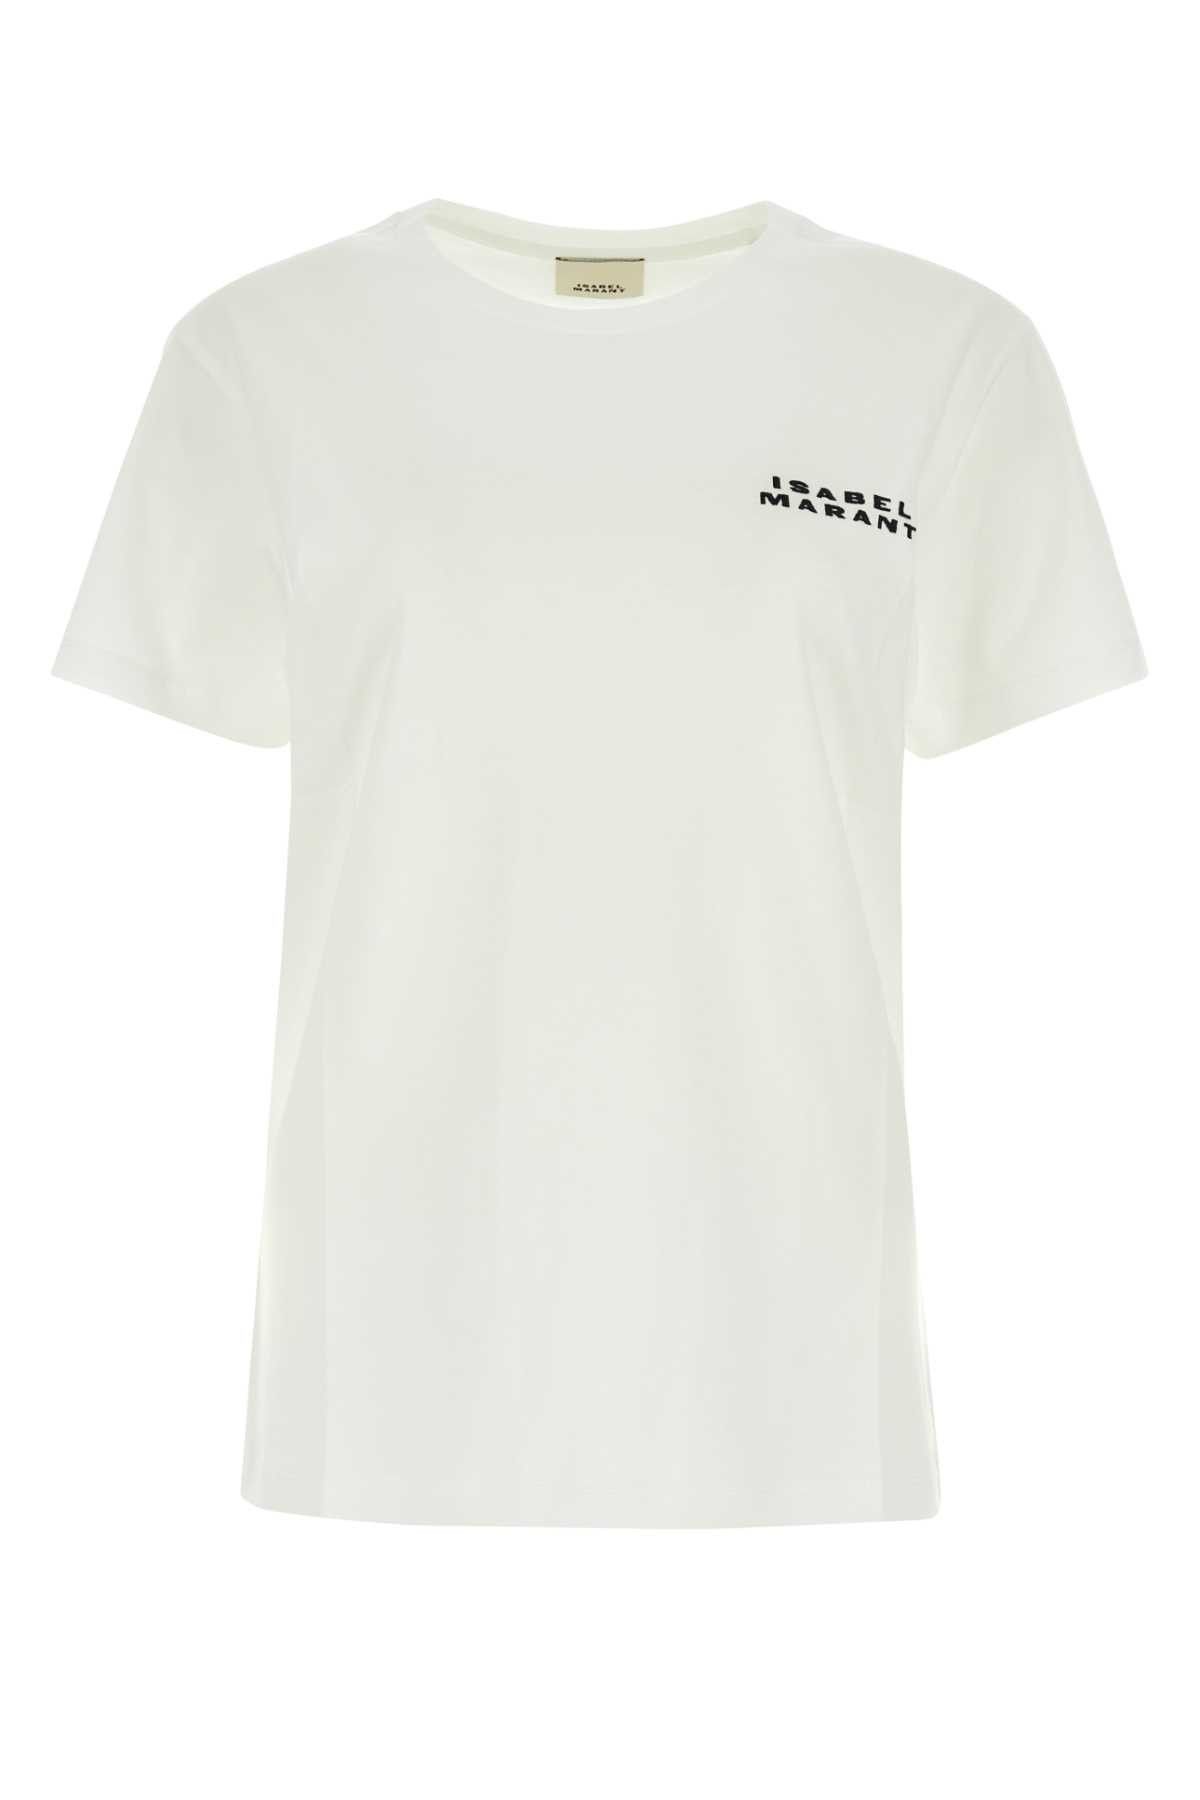 Isabel Marant White Cotton Vidal T-Shirt | Grailed